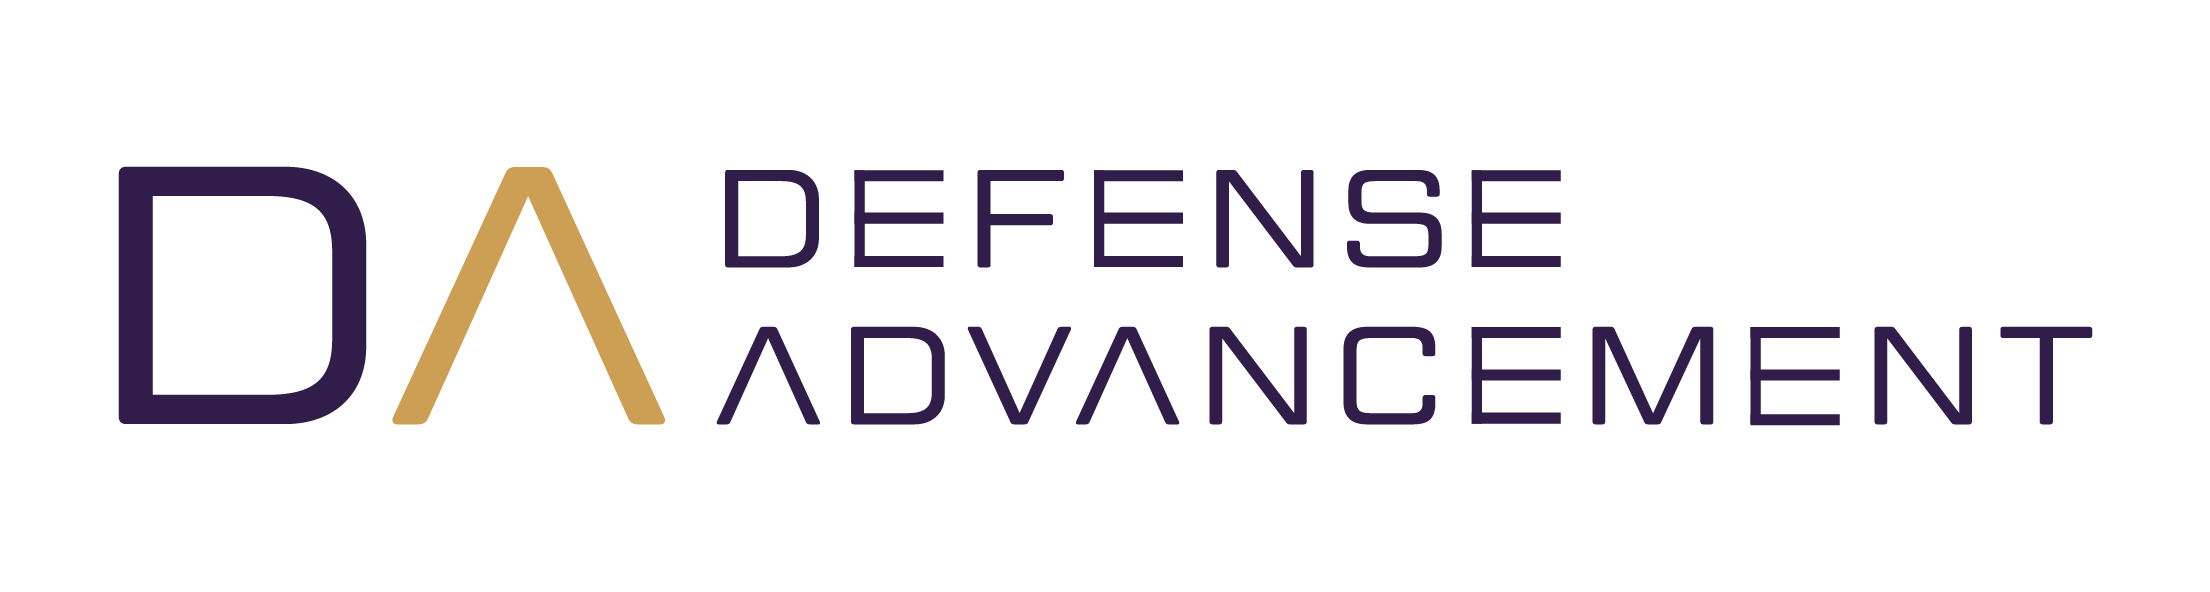 Defense Advancement